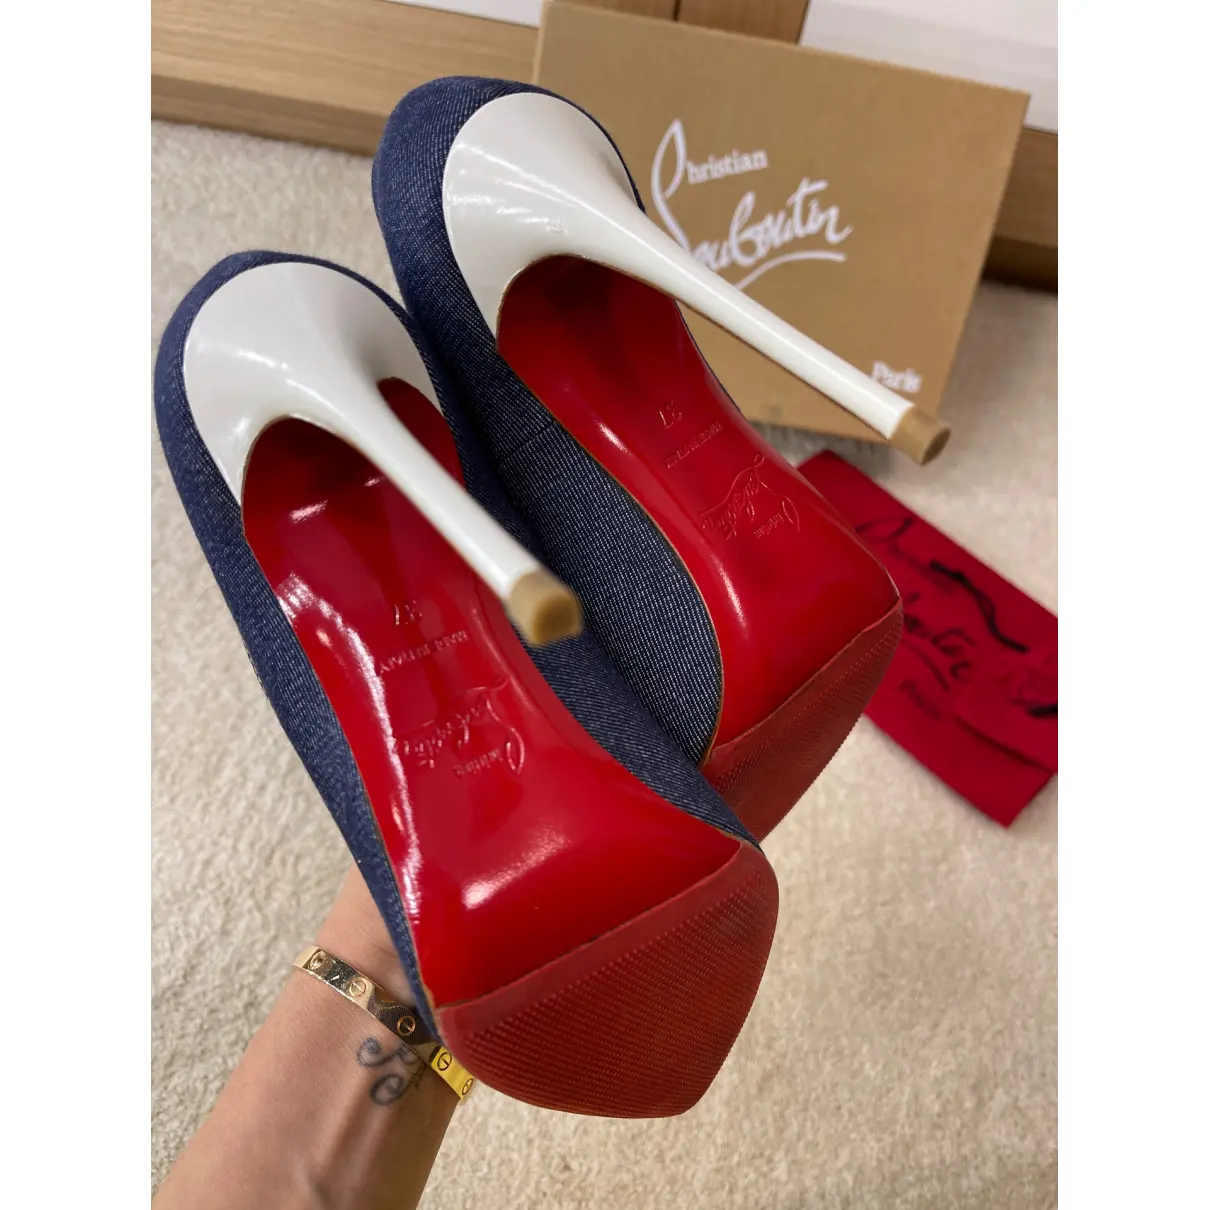 Buy Christian Louboutin So Kate cloth heels online